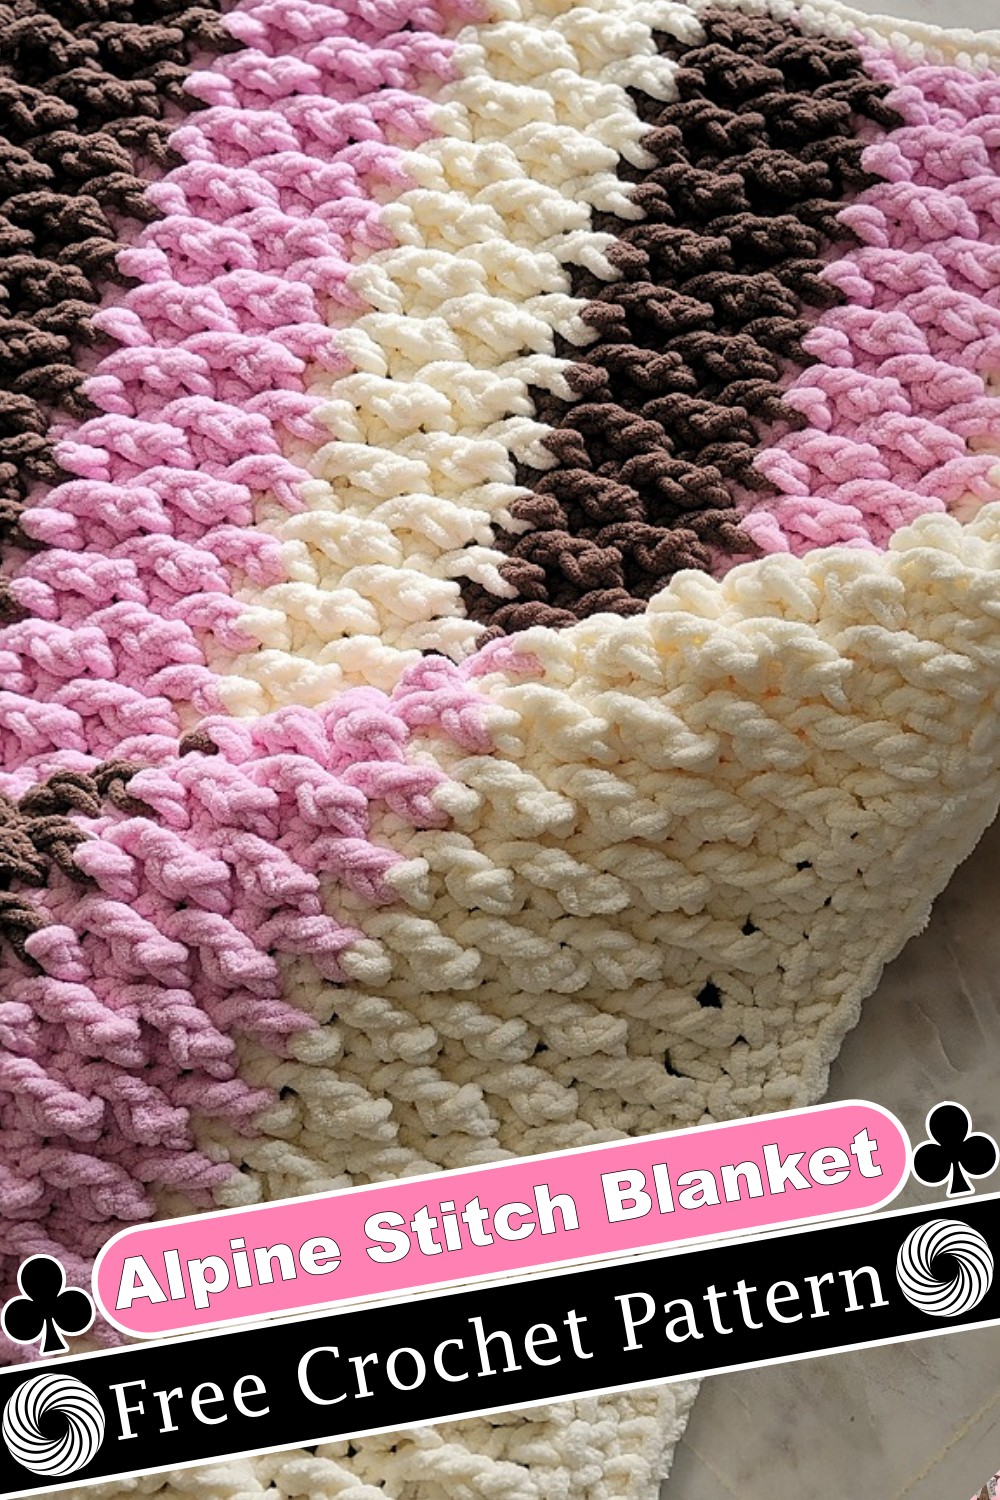 Alpine Stitch Blanket